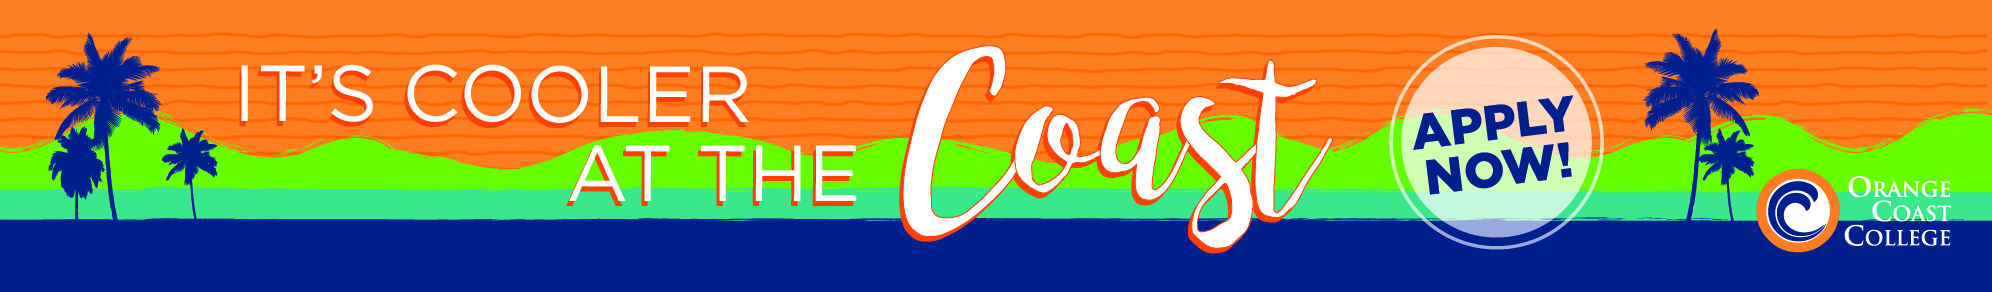 It's Cooler At The Coast: Orange Coast College, Costa Mesa, Orange County, California.